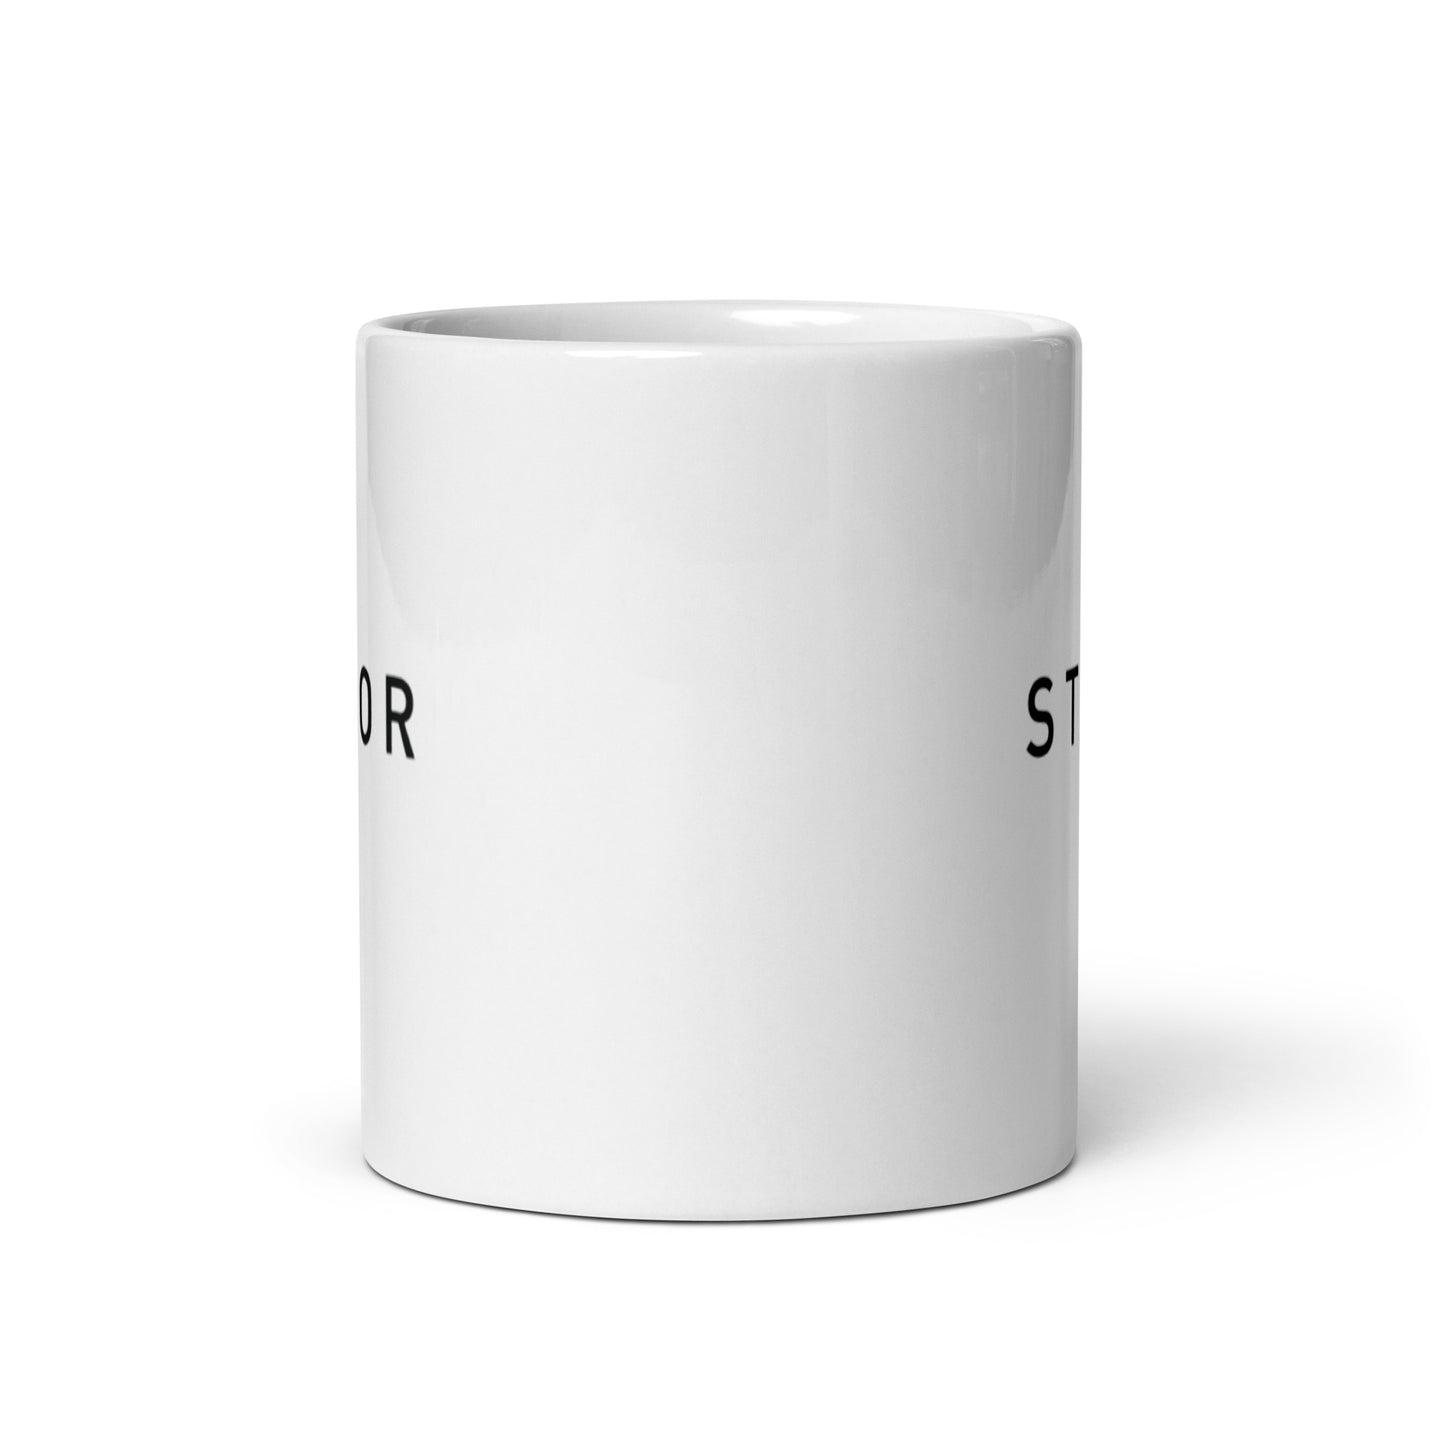 STOOR Logo Mug - Glossy White